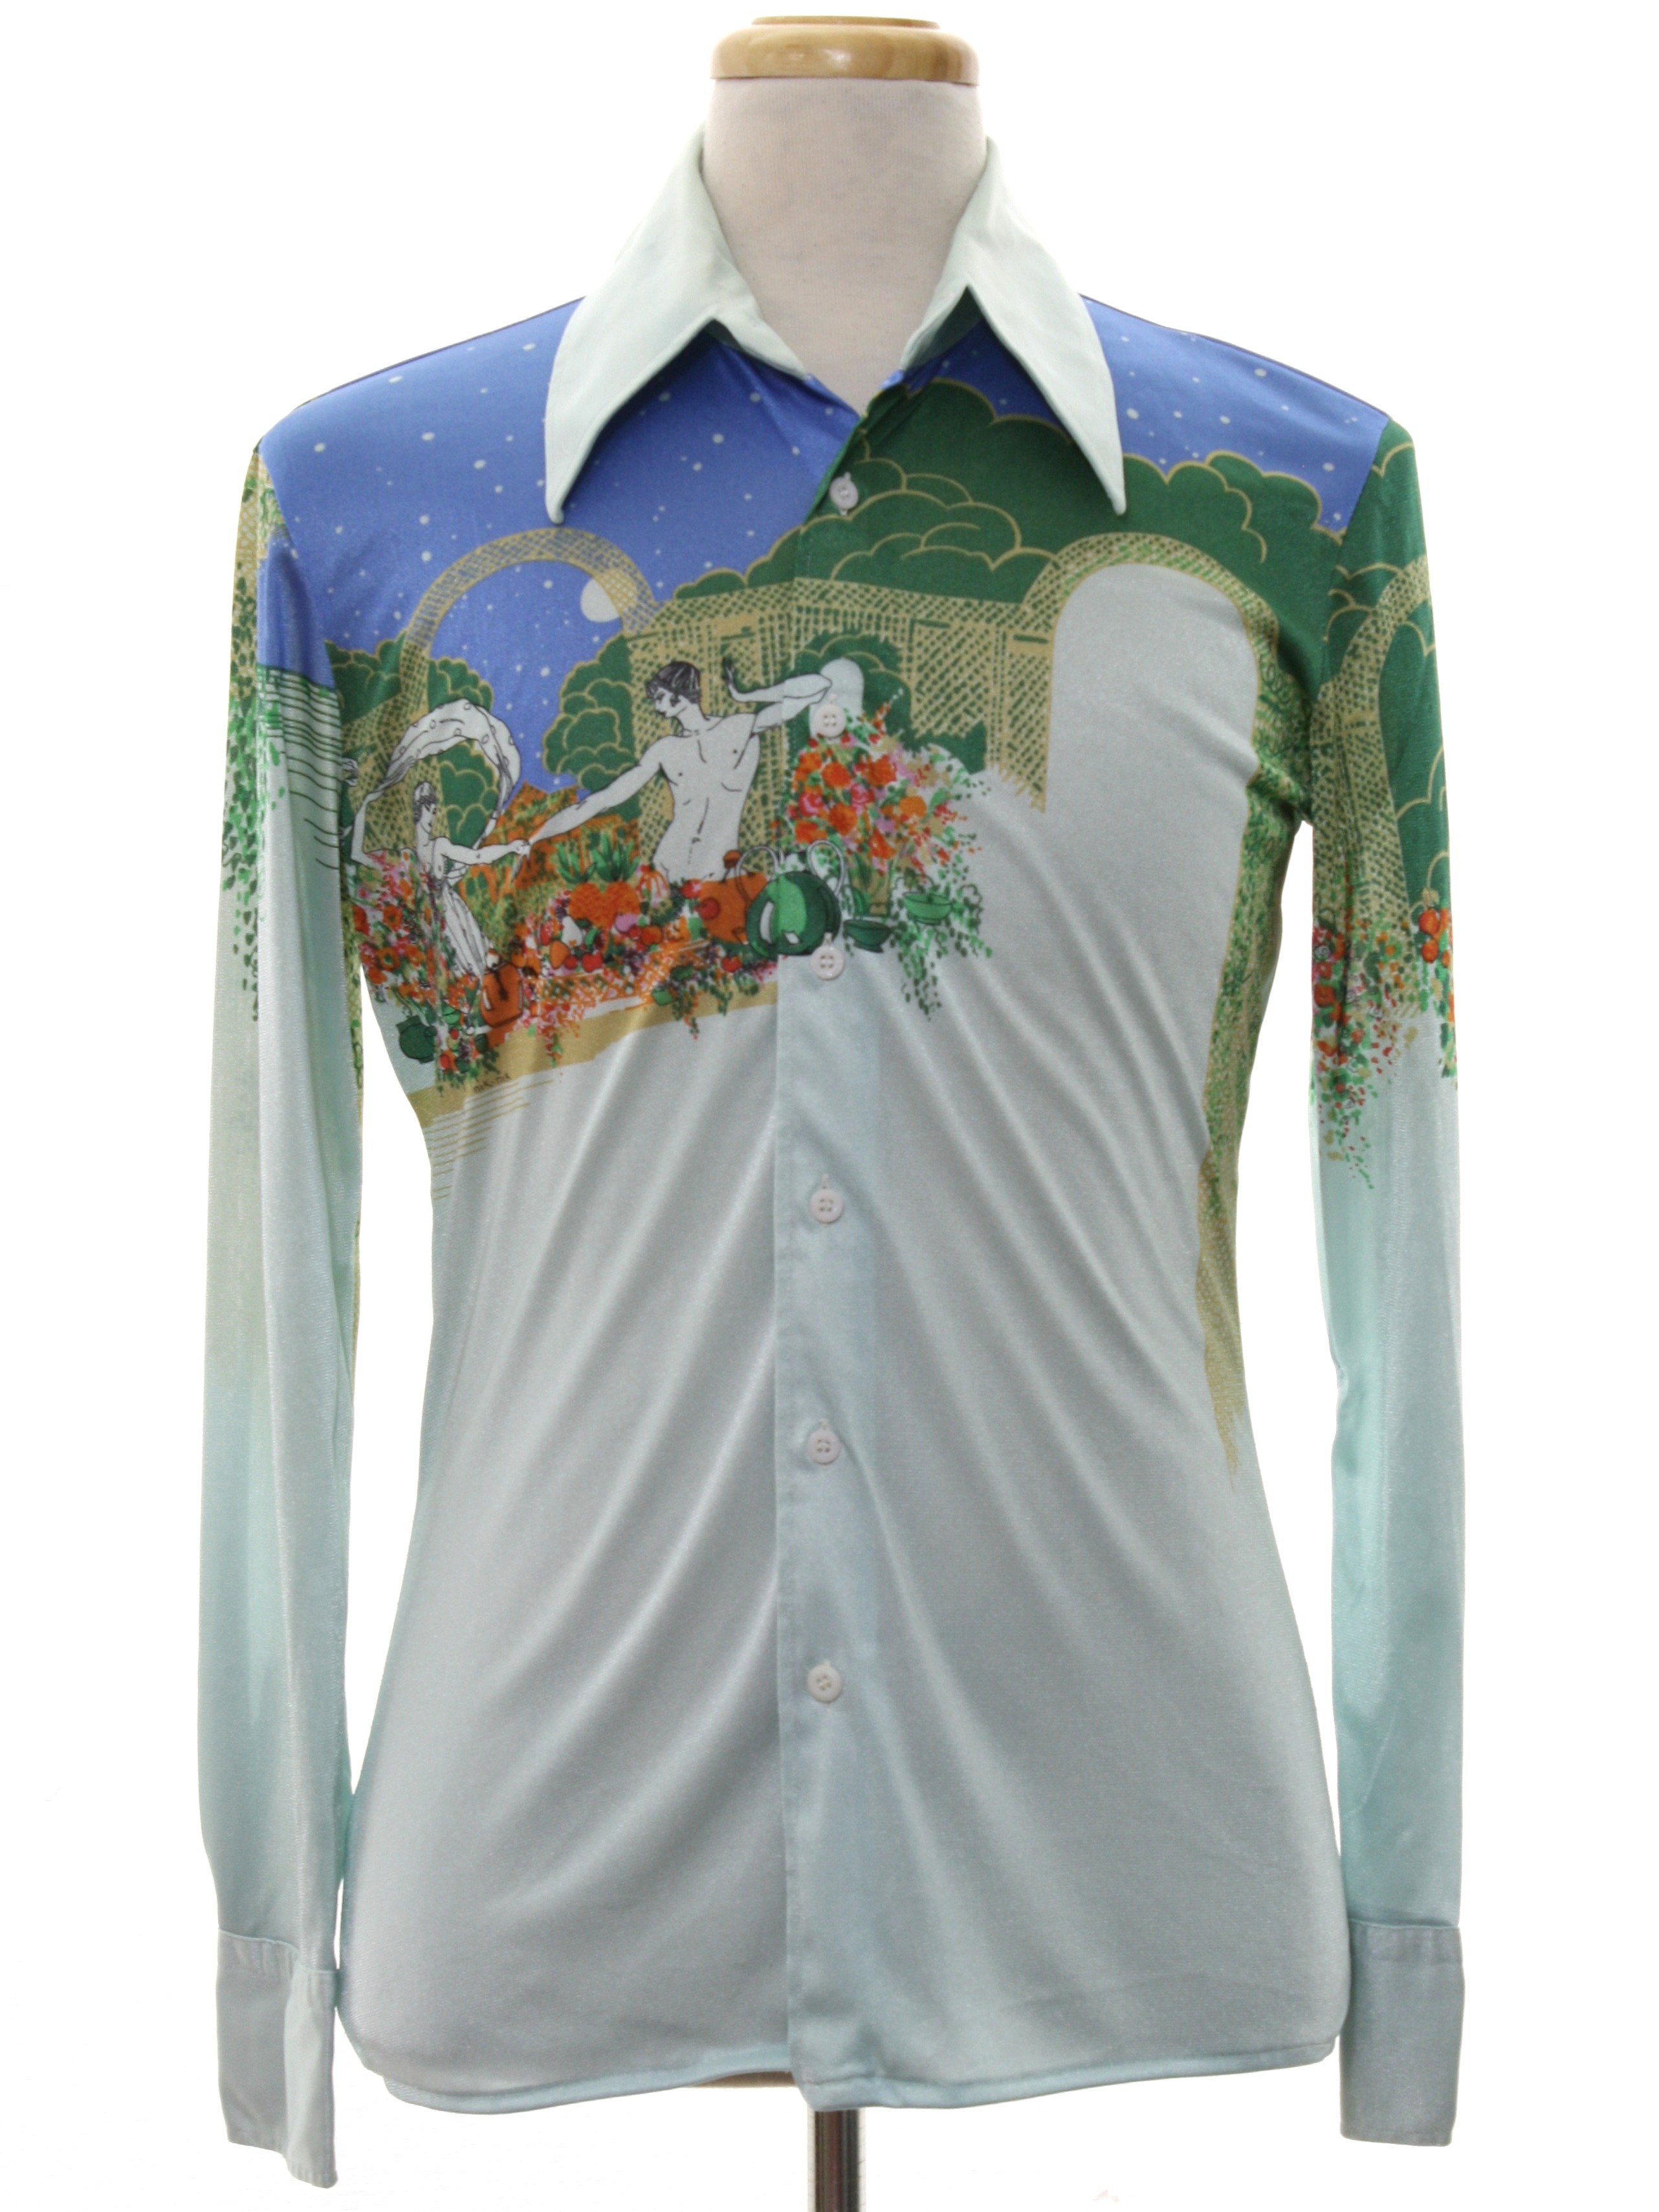 RARE Unisex NIK NIK Shirt/70s Disco Shirt/70s Nik Nik/70s Fashion